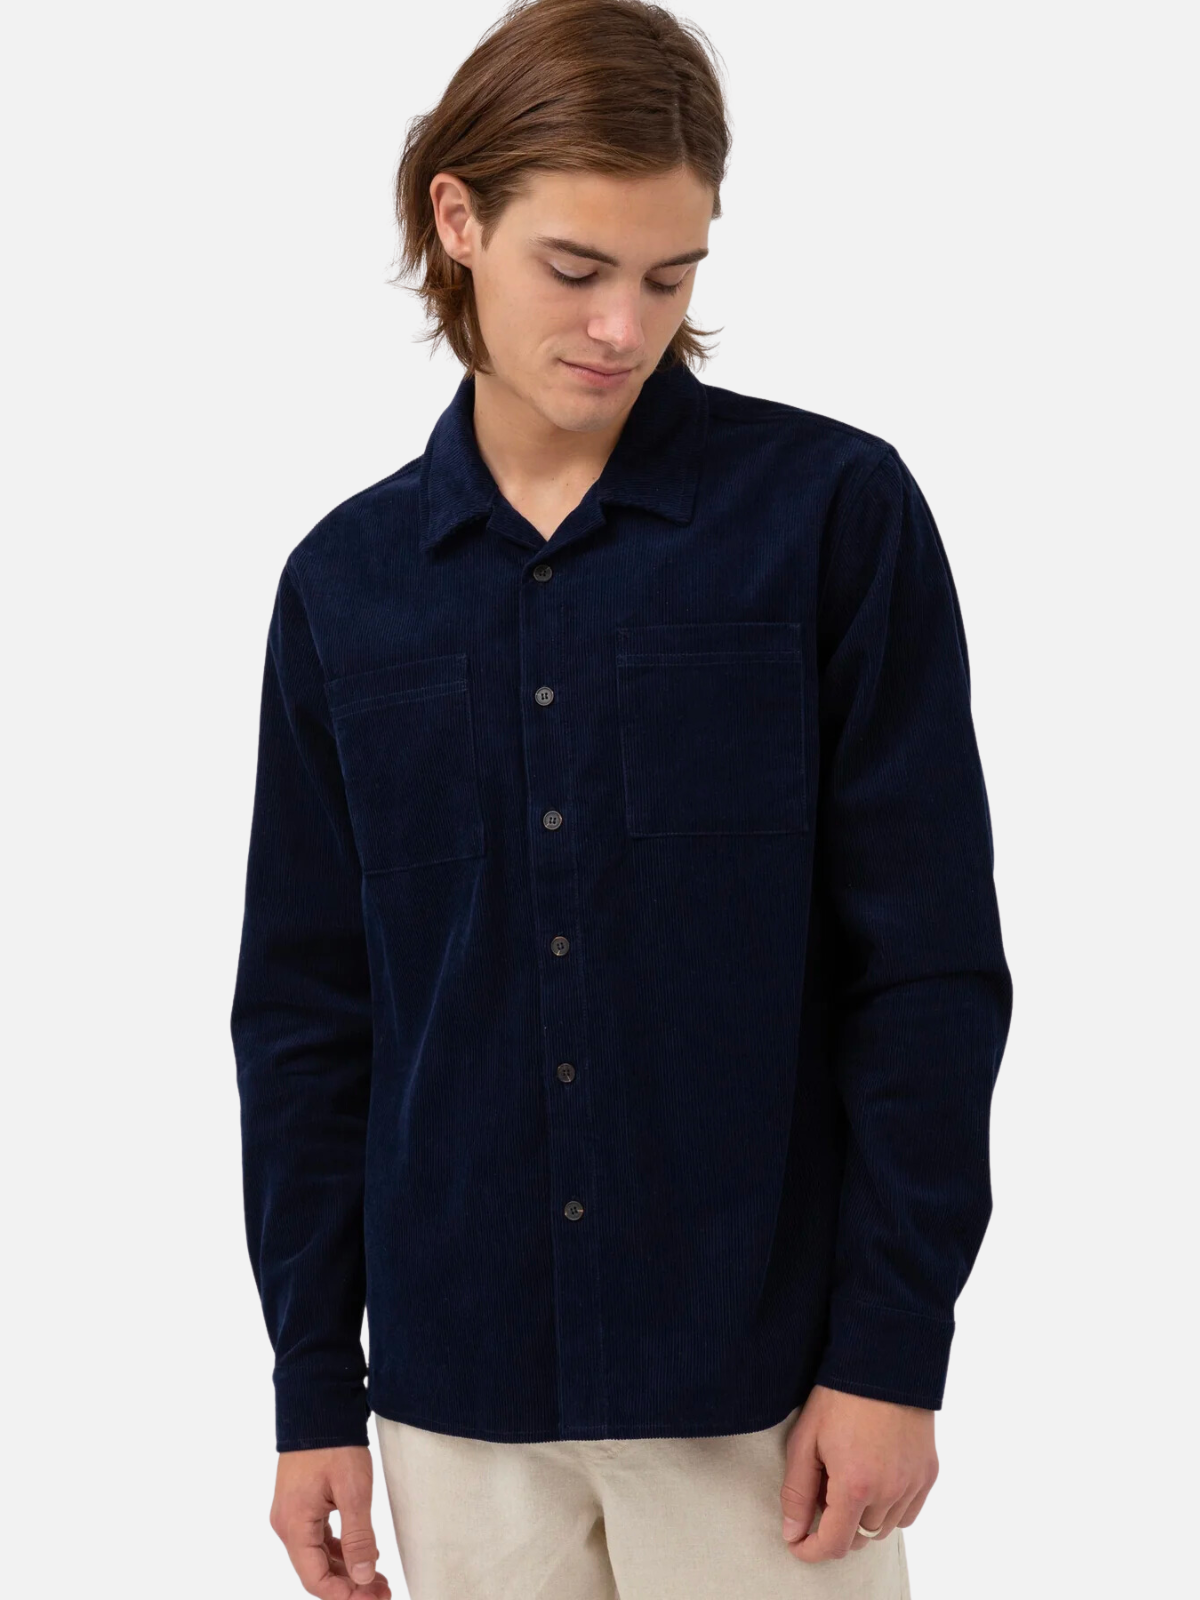 rhythm corduroy ls long sleeve shirt indigo blue 100% cotton button down kempt athens men's clothing store downtown lumpkin street